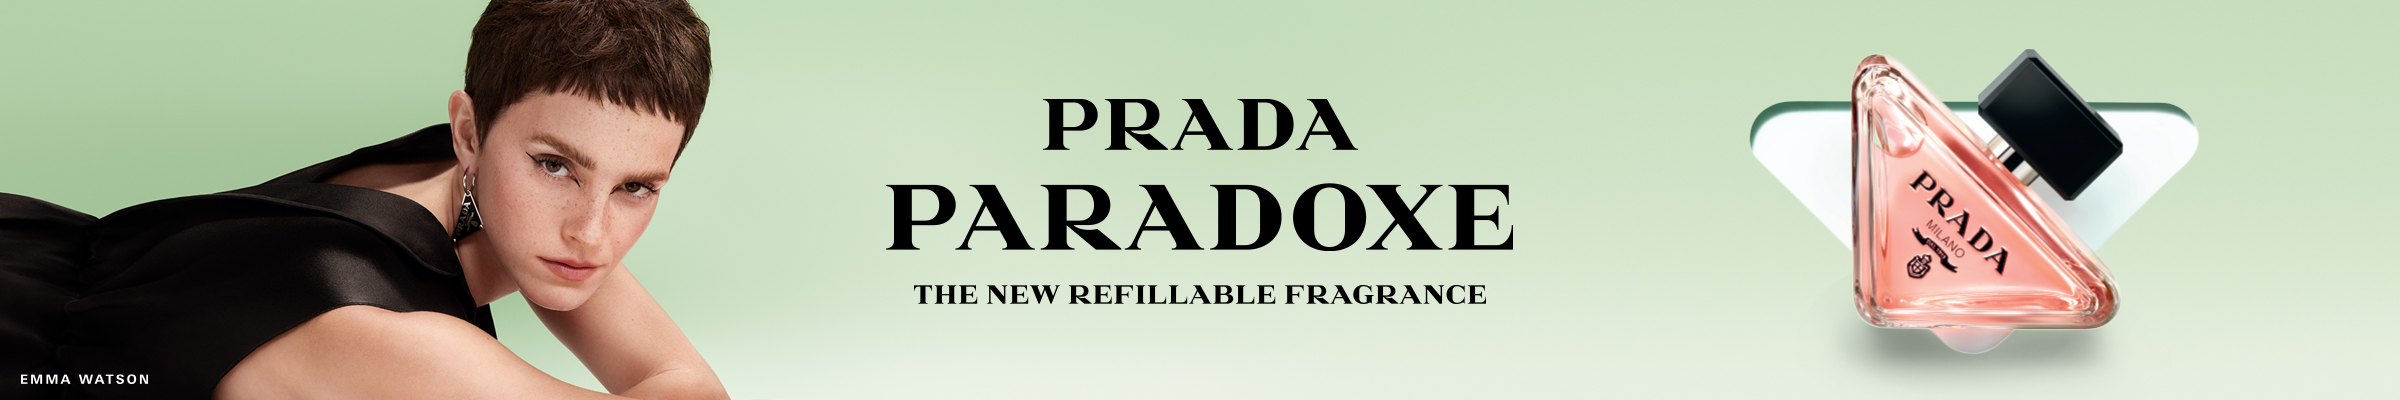 prada-banner